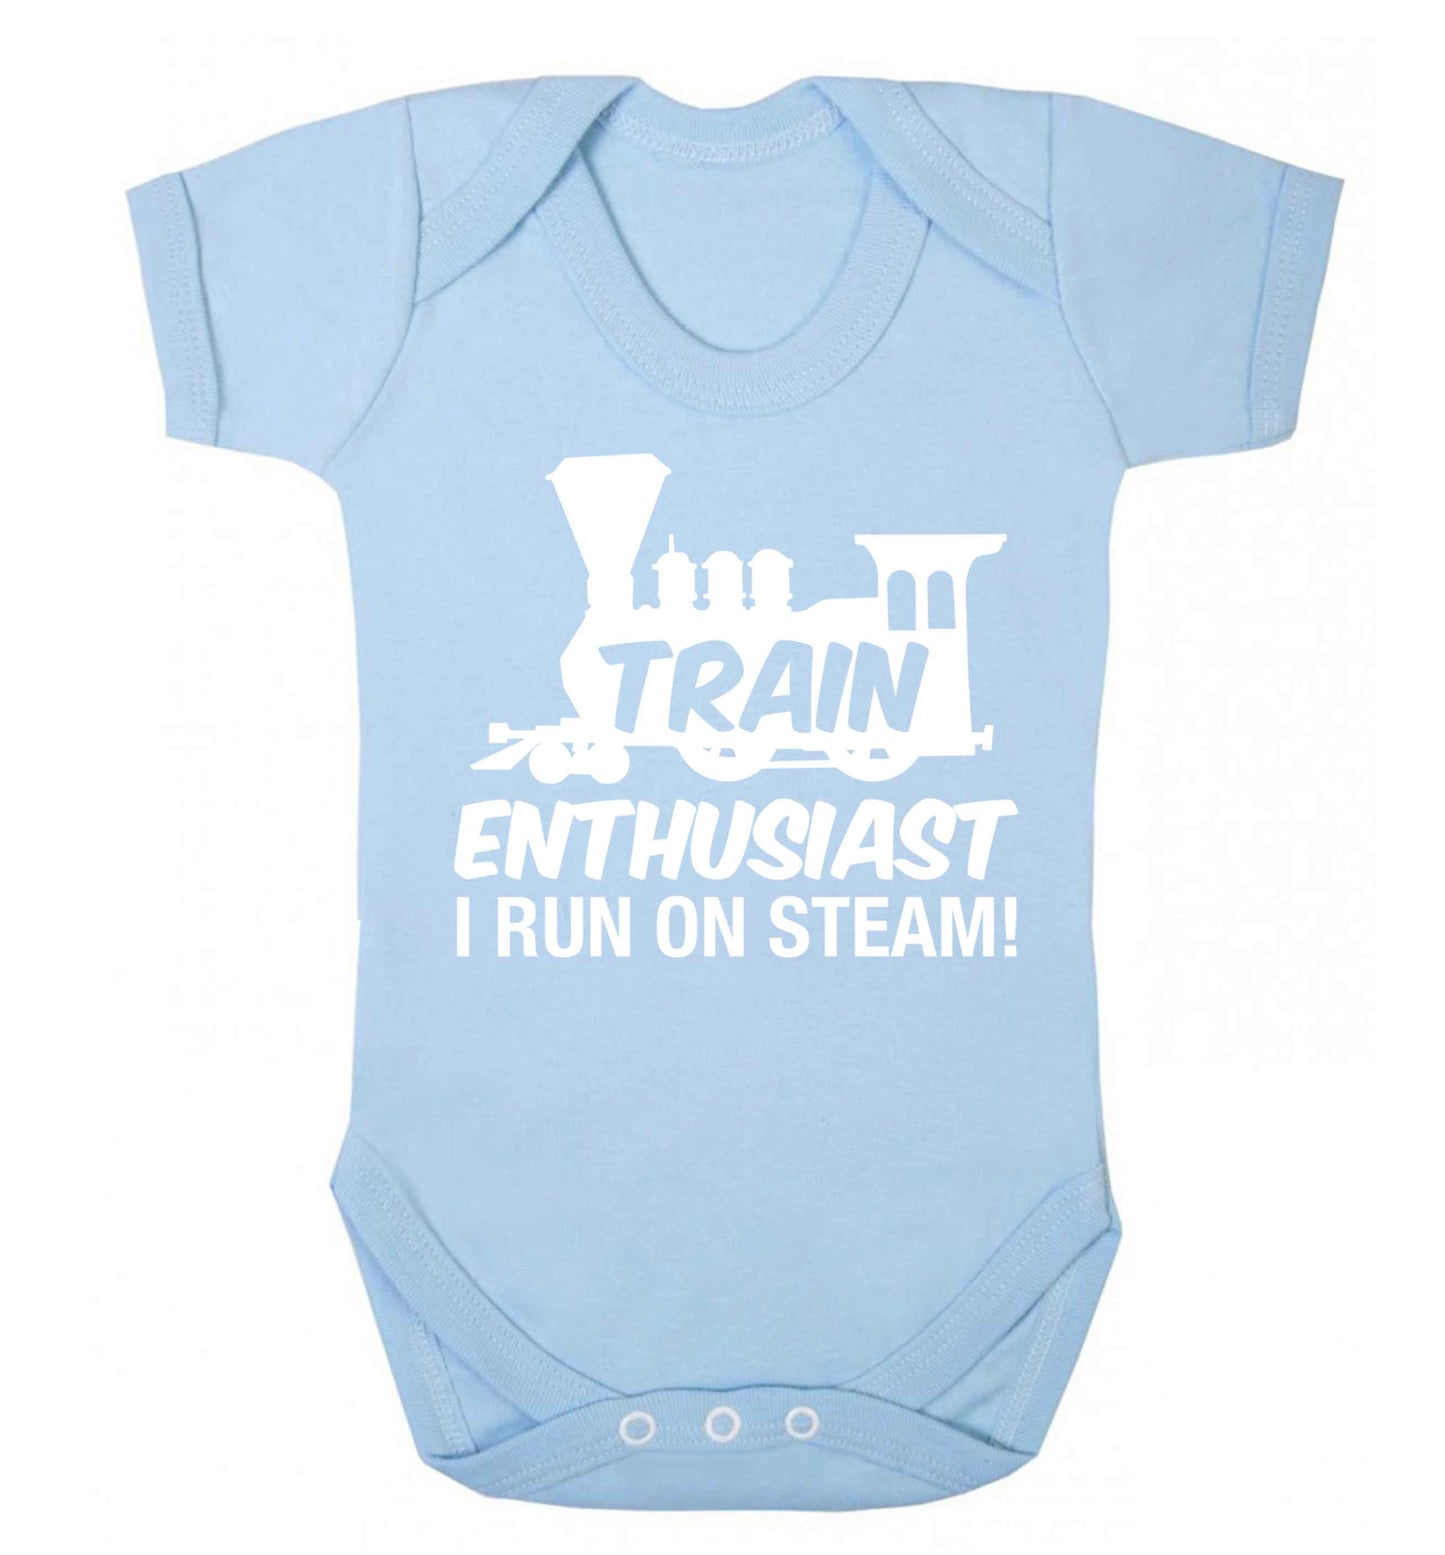 Train enthusiast I run on steam Baby Vest pale blue 18-24 months